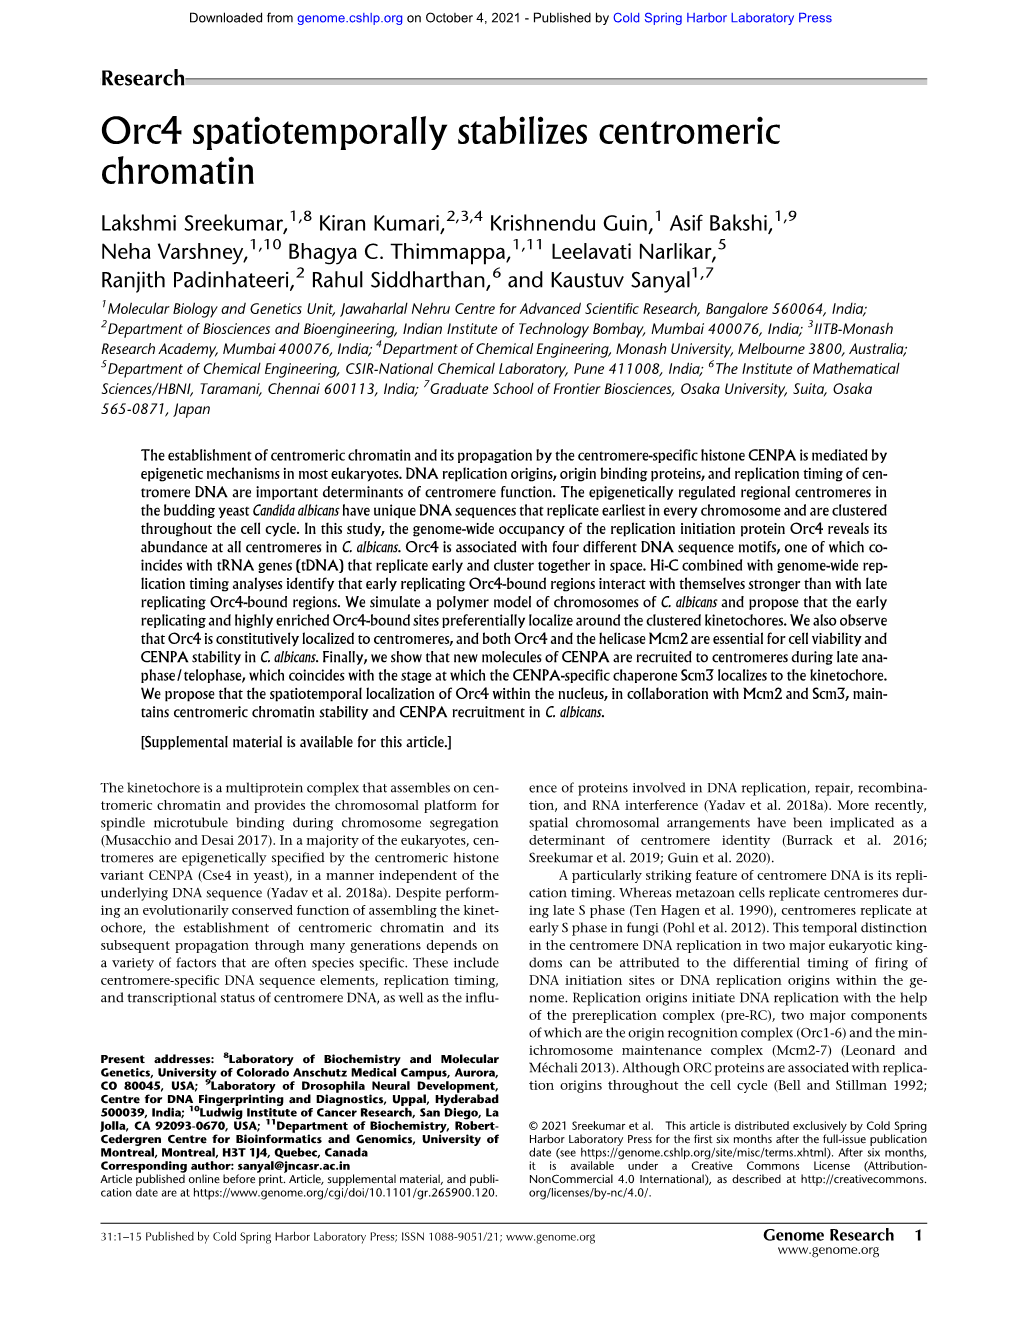 Orc4 Spatiotemporally Stabilizes Centromeric Chromatin